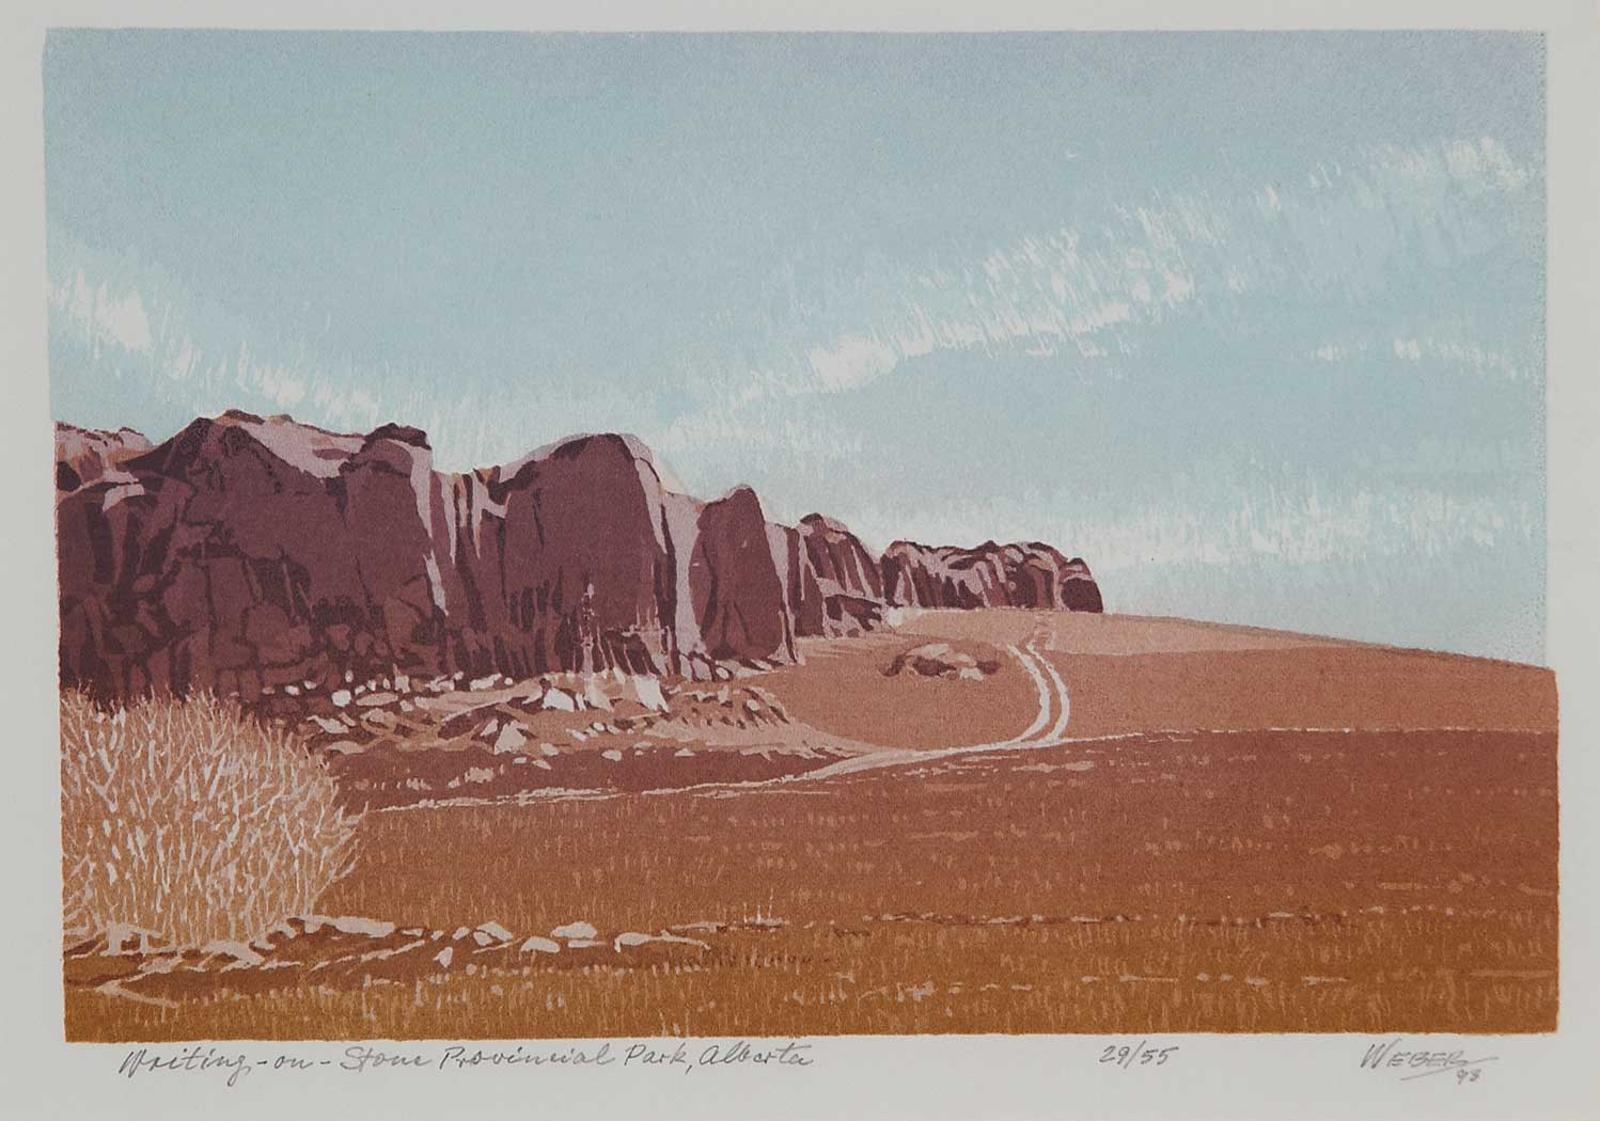 George Weber (1907-2002) - Writing-on-Stone Provincial Park, Alberta  #29/55